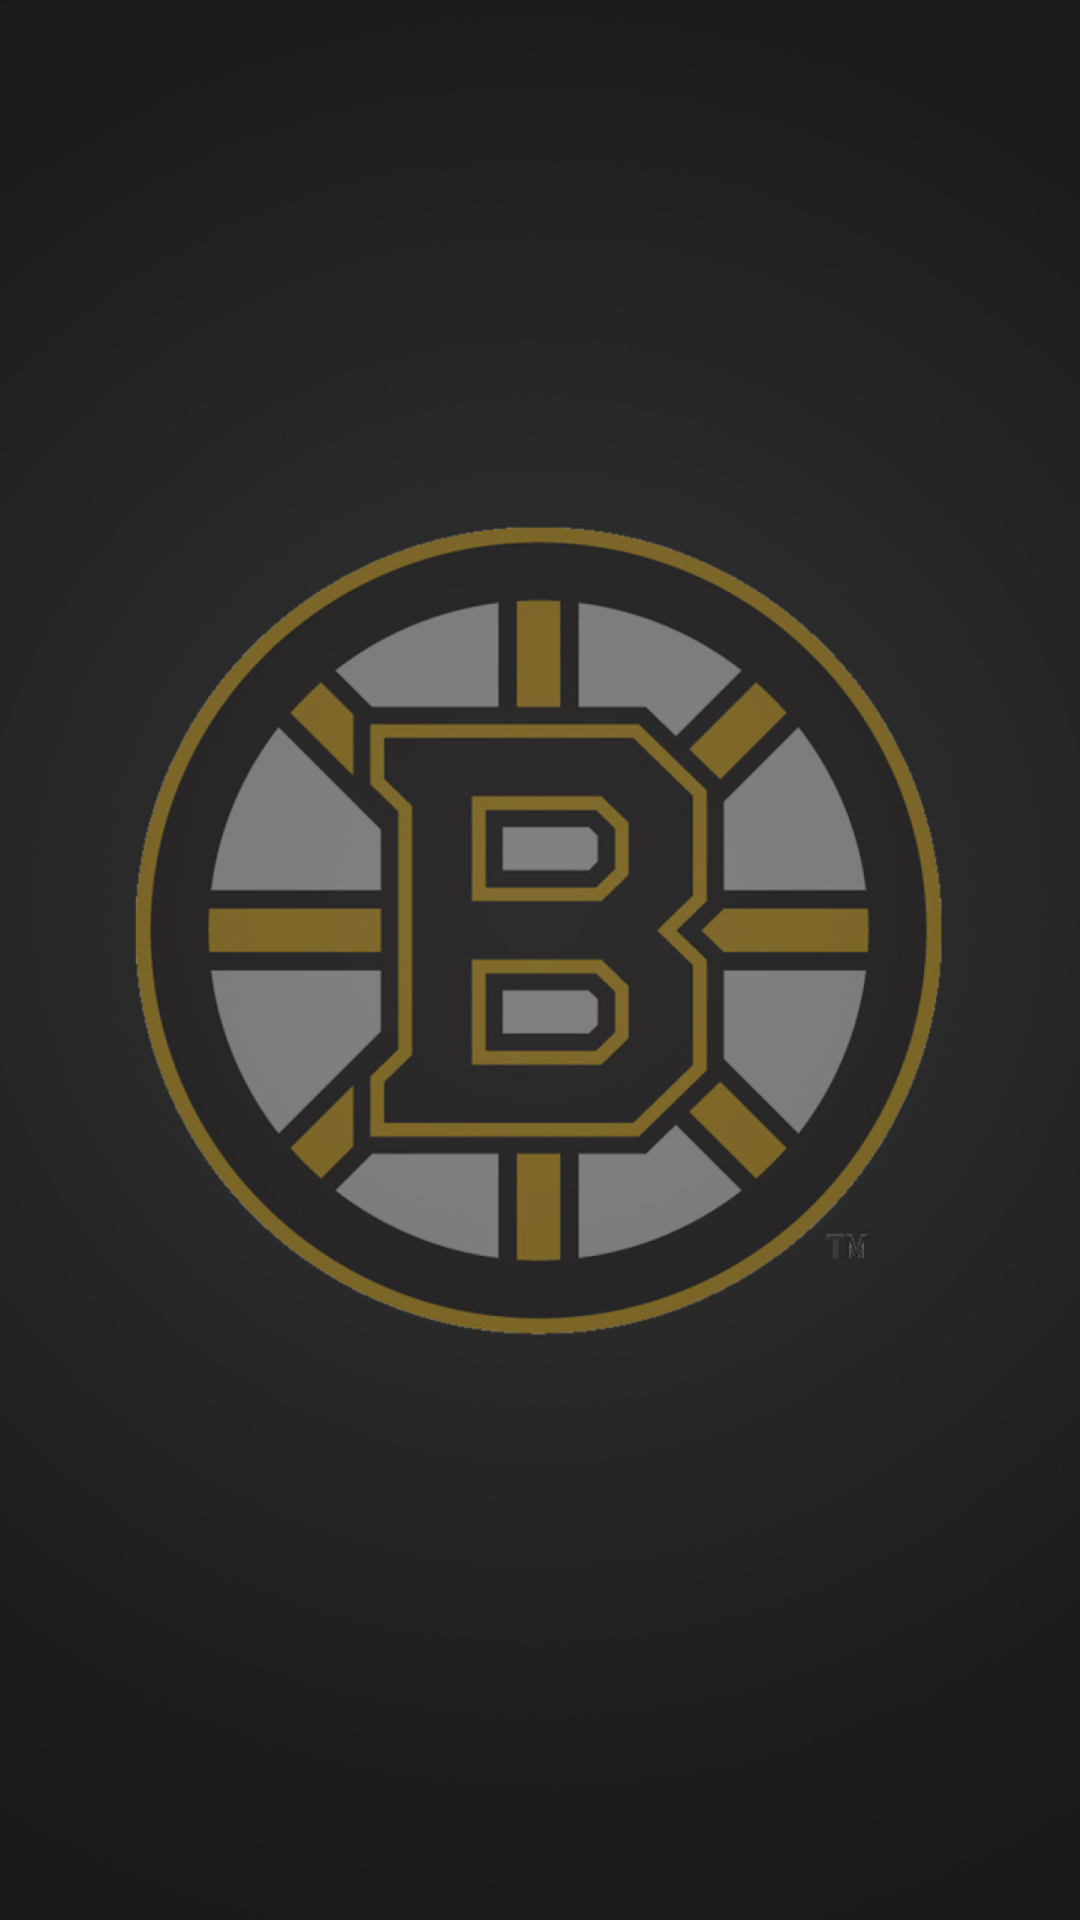 Boston Bruins Wallpaper for iPhone 6 Plus.